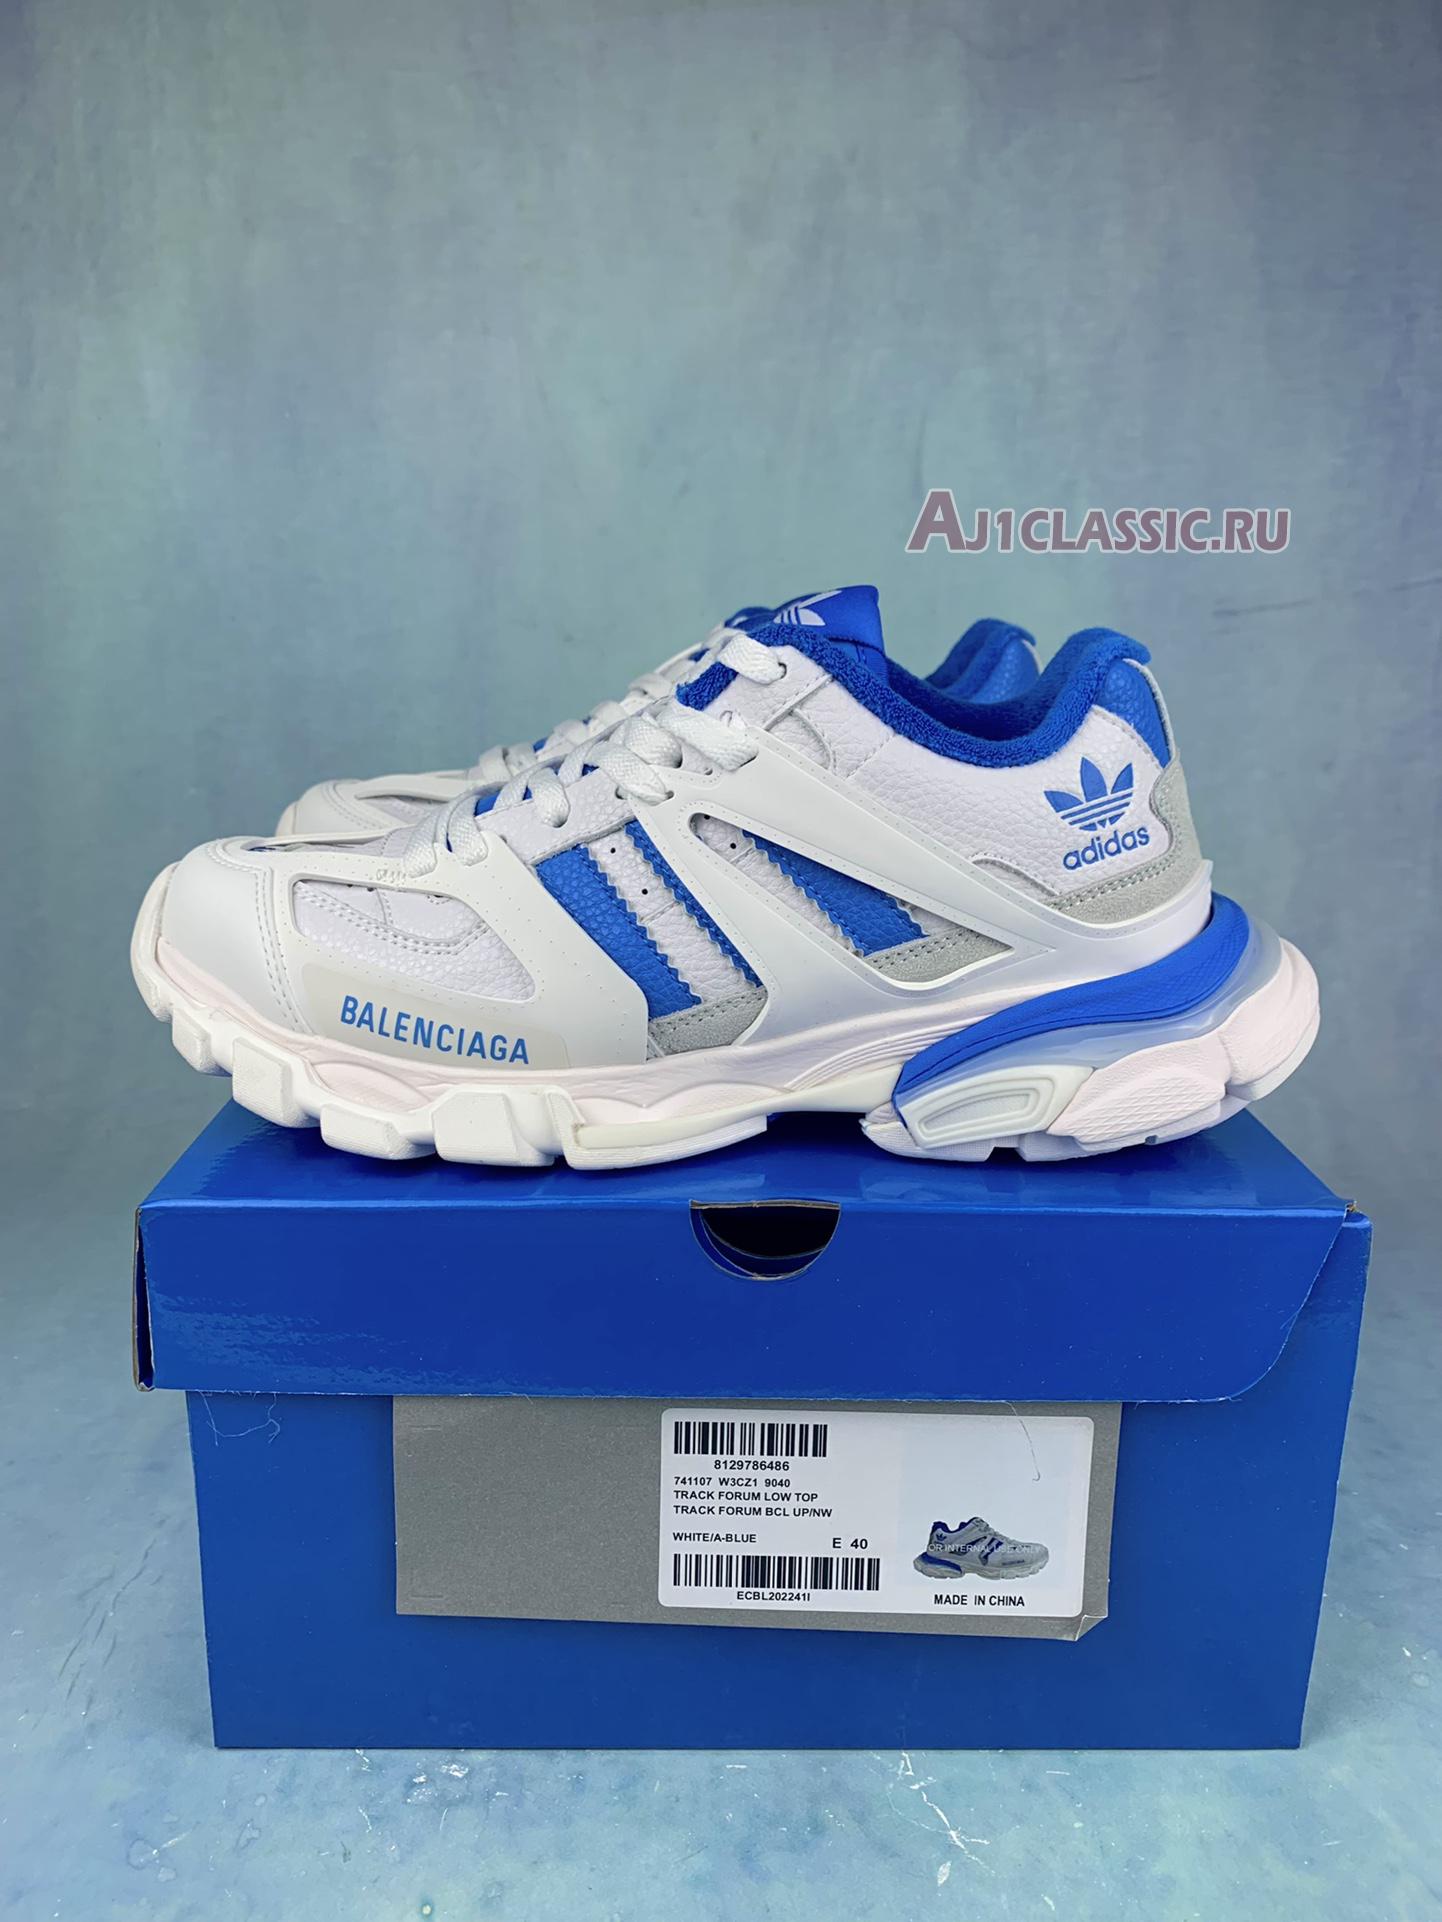 Balenciaga Adidas Track Forum Low Top Sneaker White Blue 741107 W3CZ 19040 White/Blue Sneakers